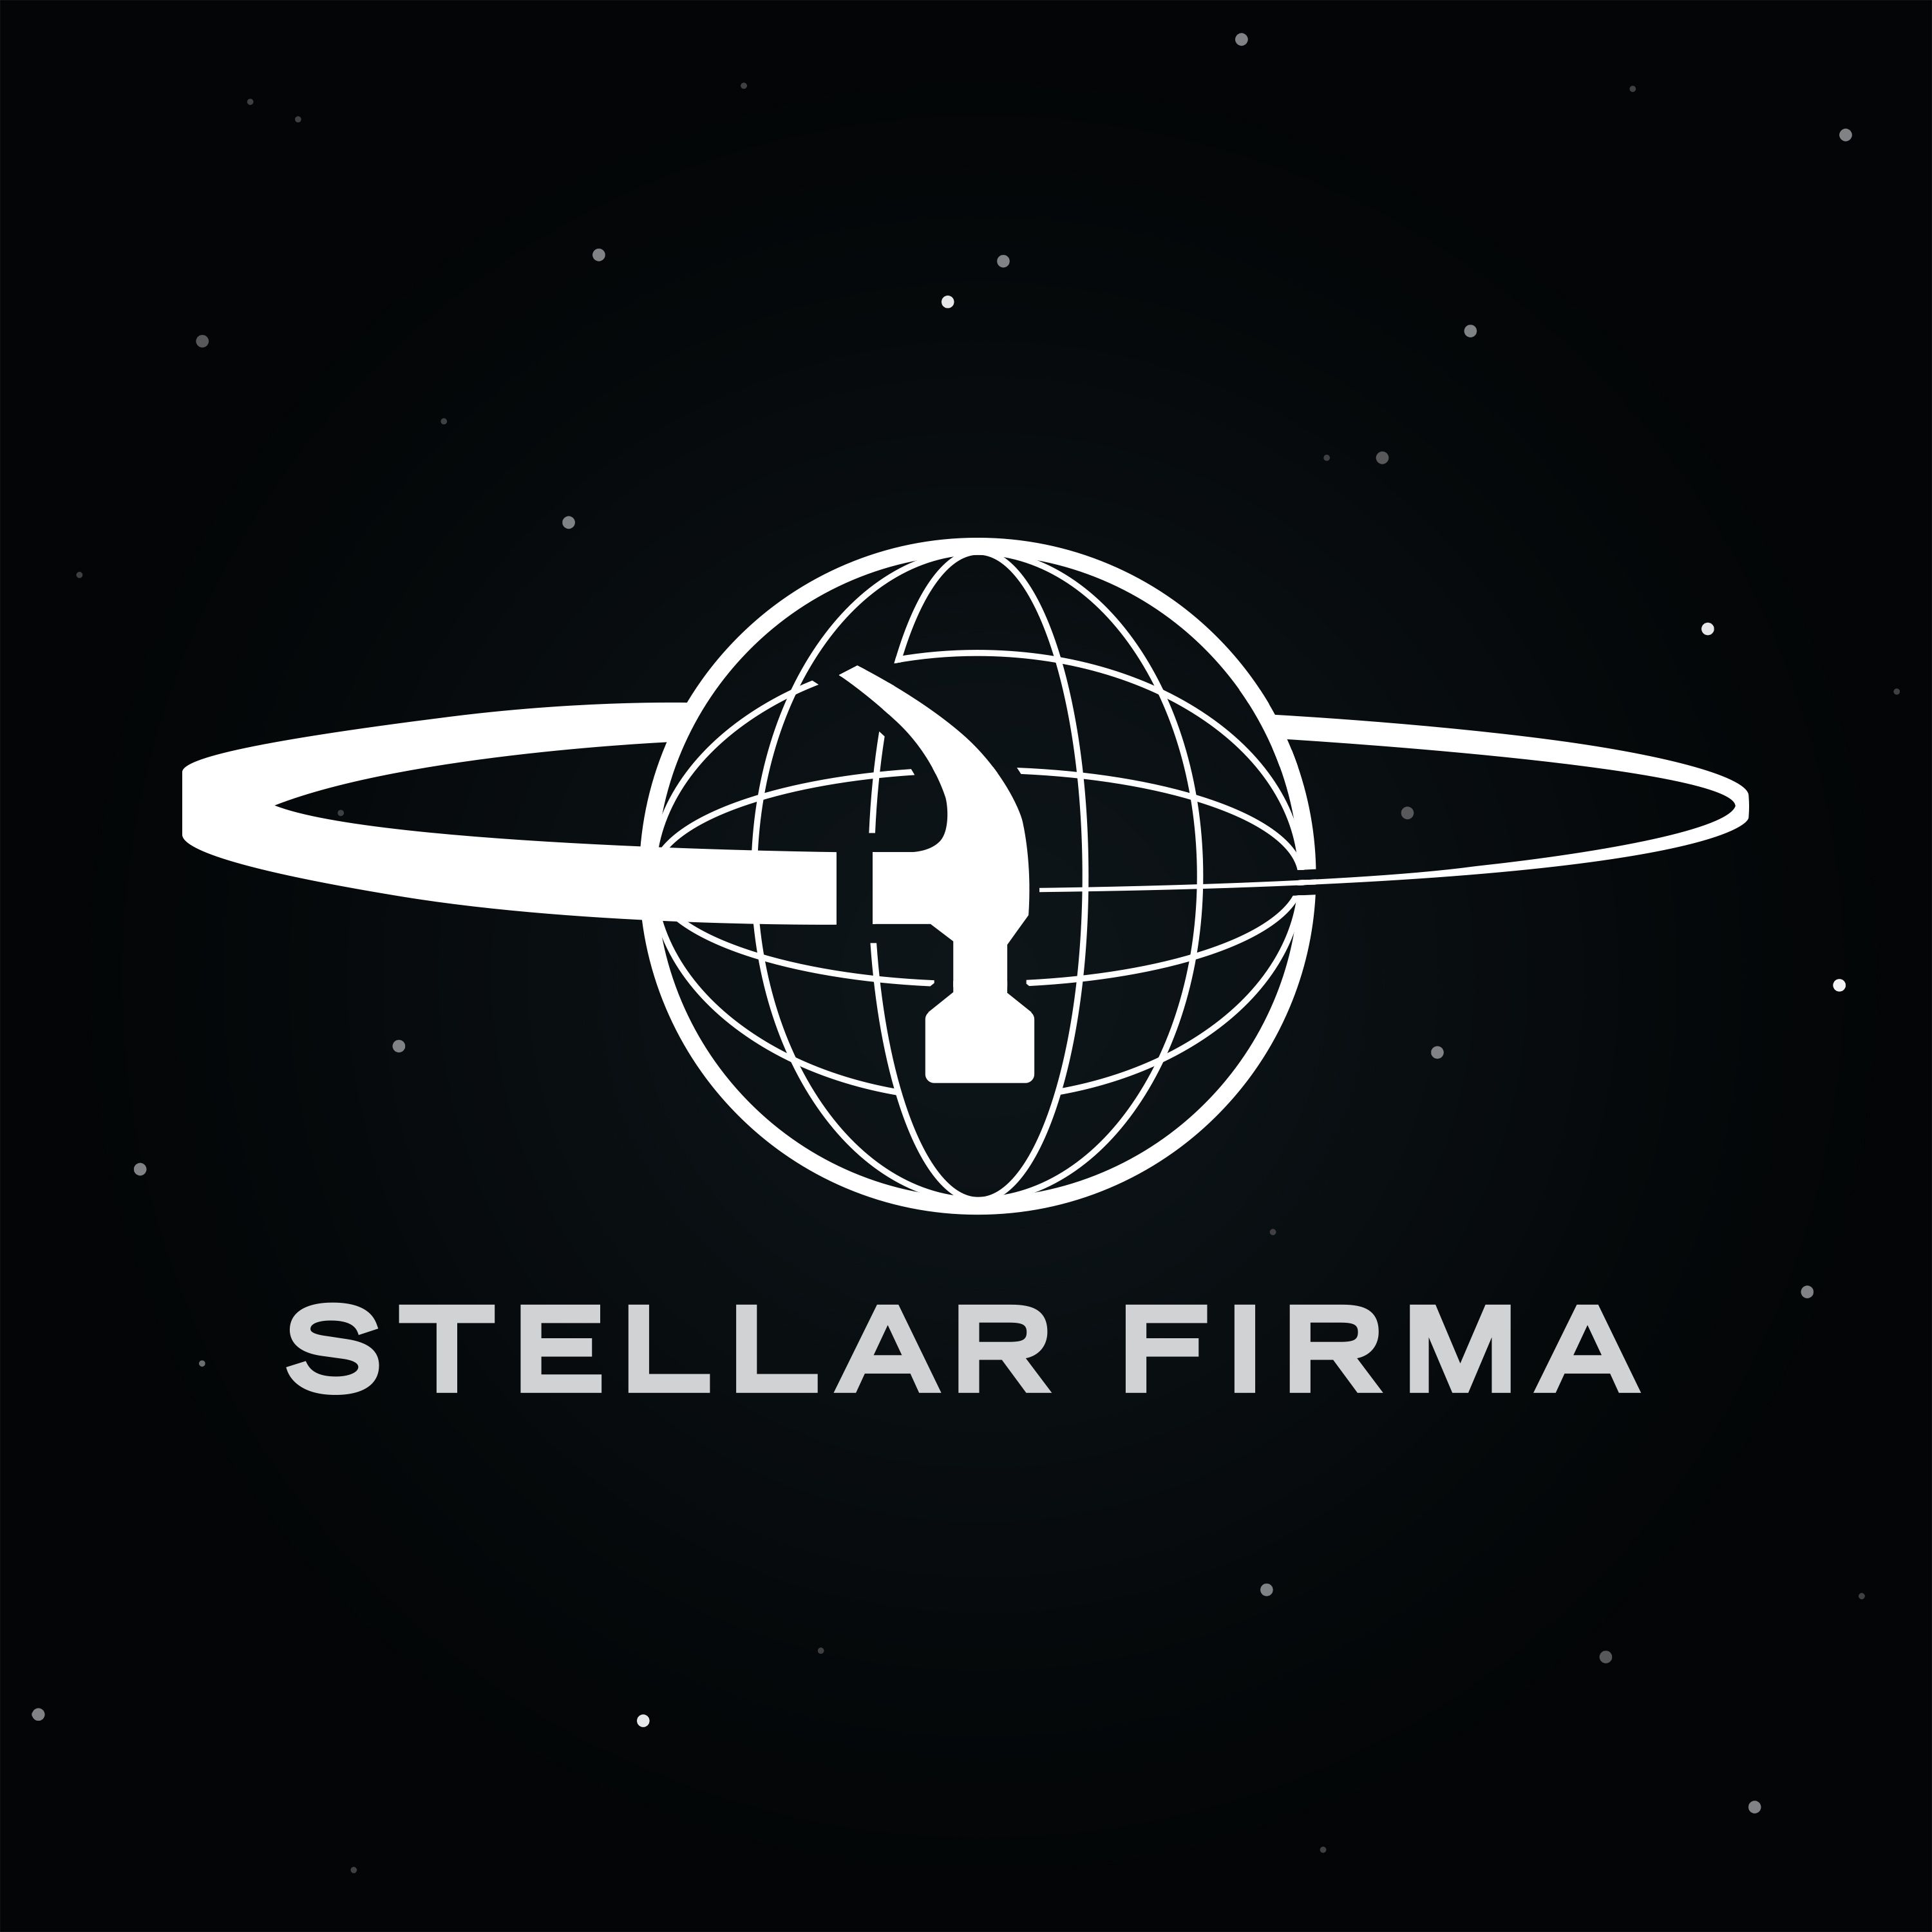 Behind The Waveform: The Making of Stellar Firma